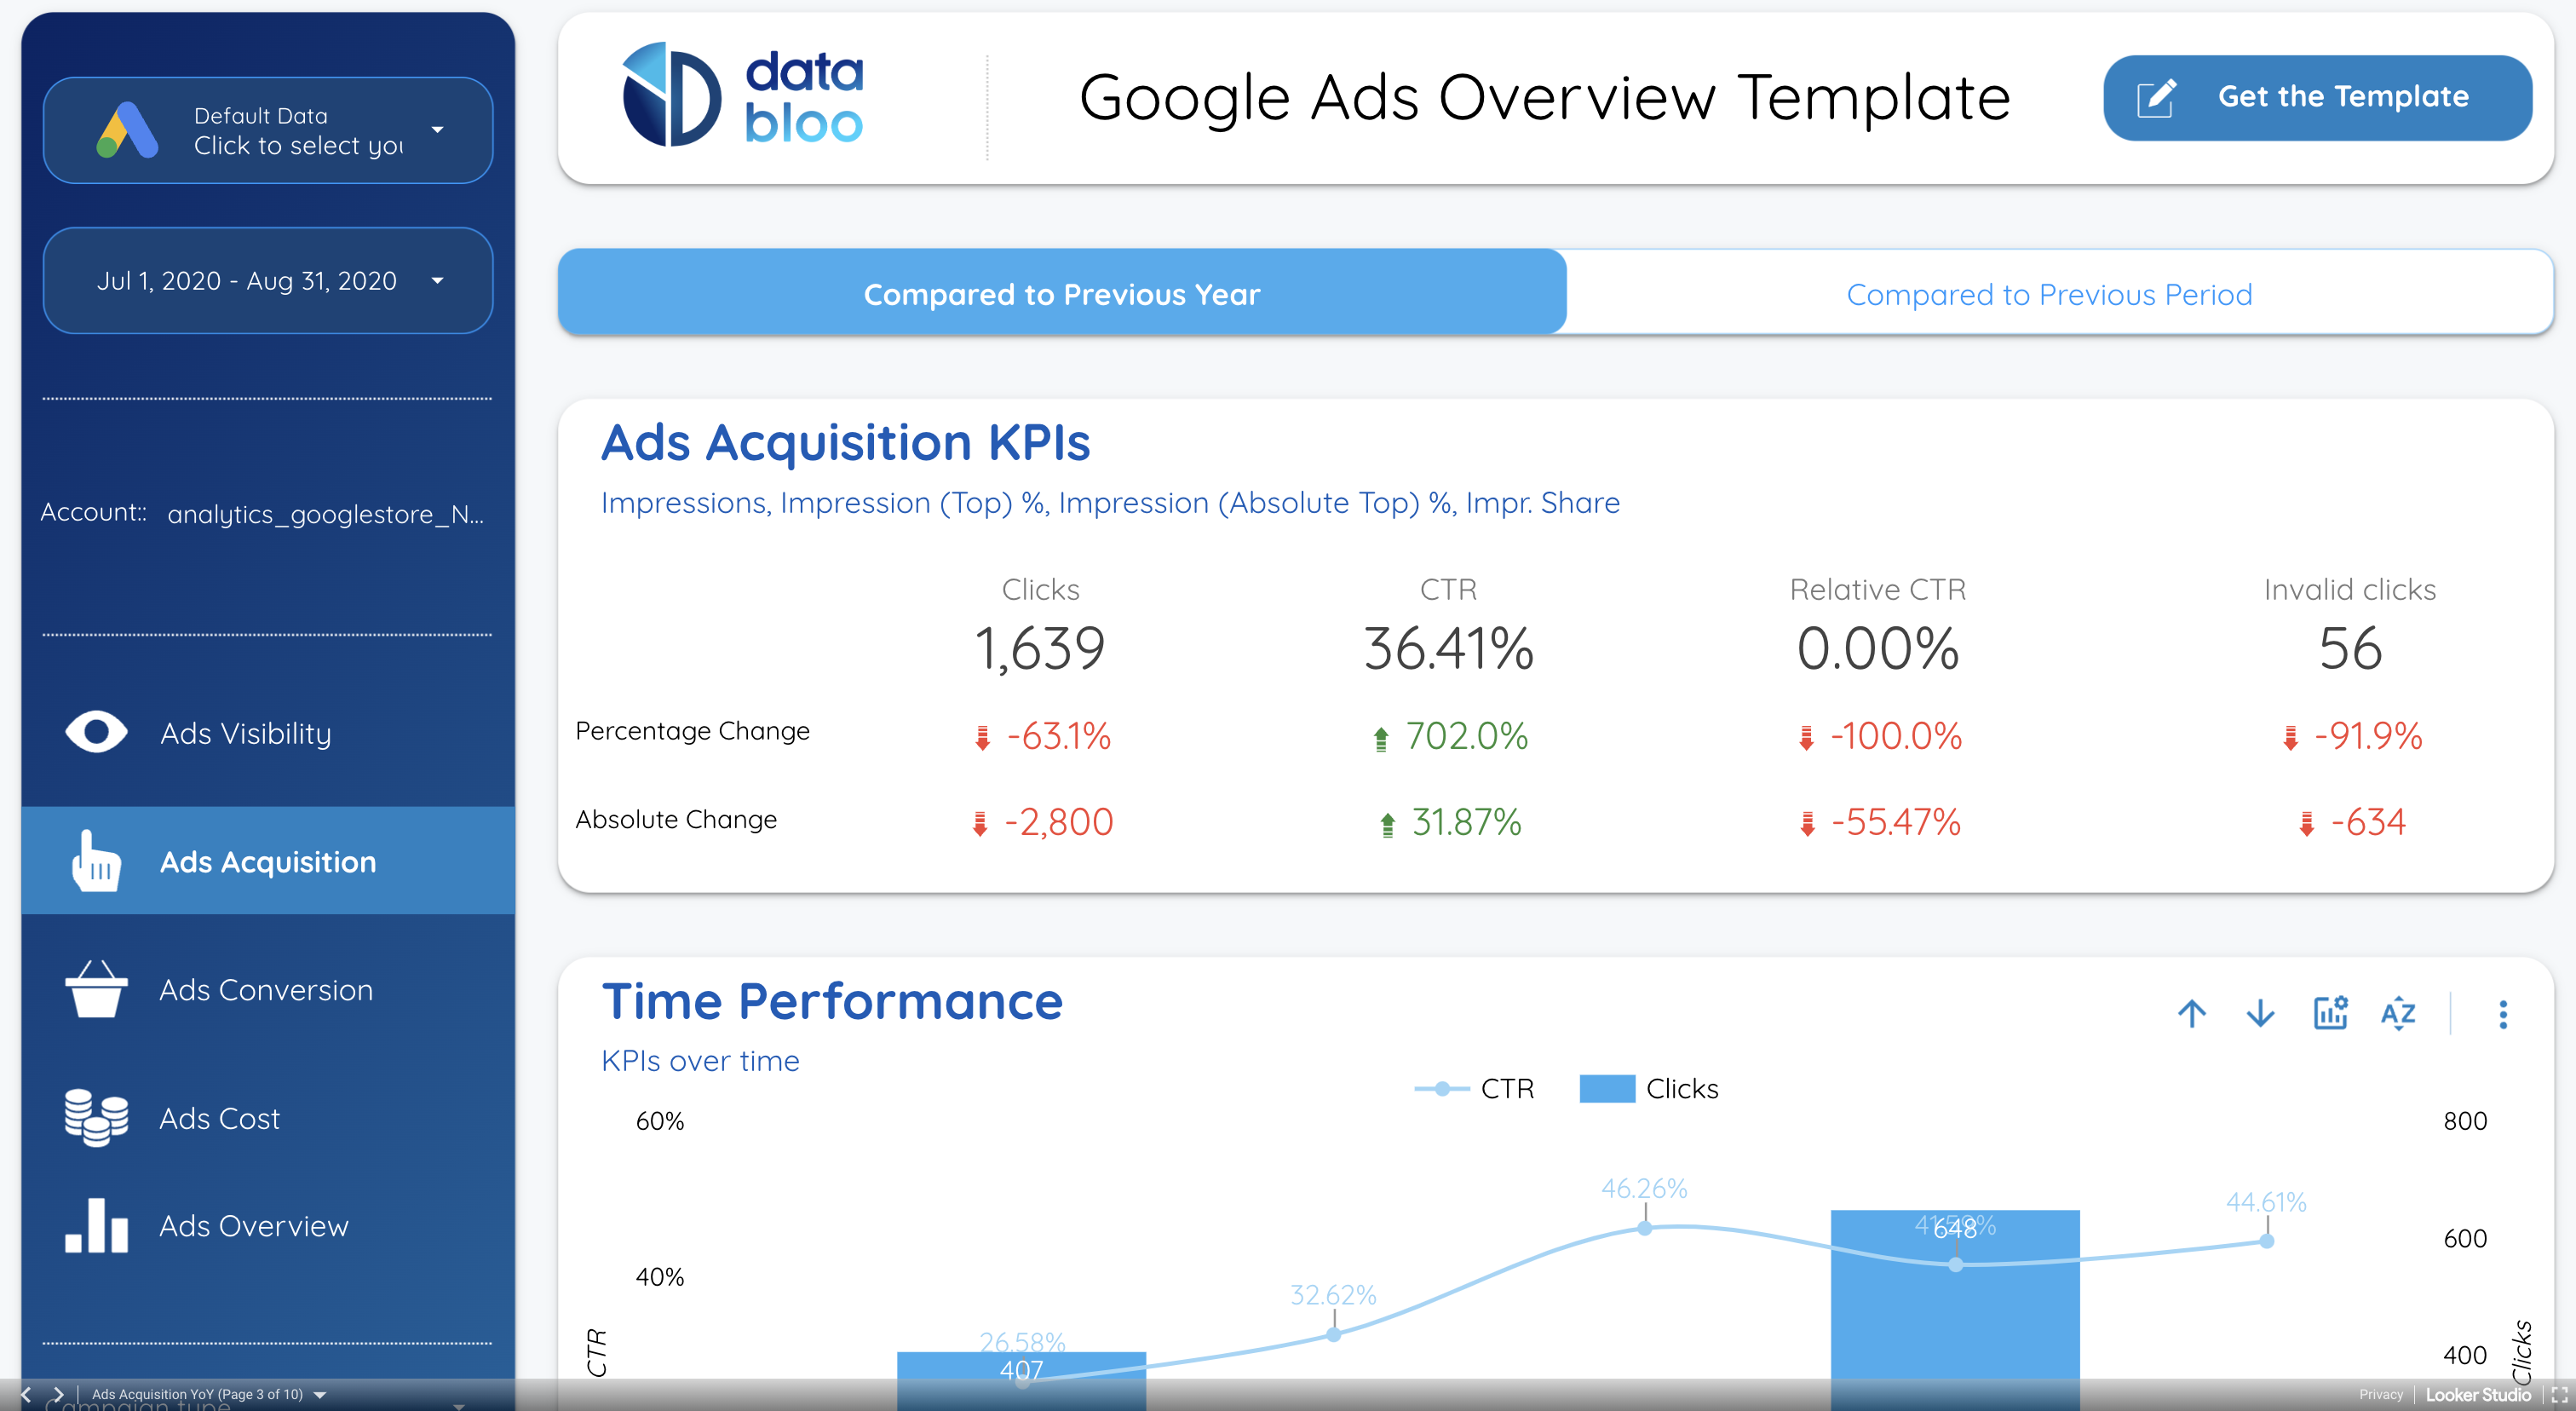 google ads looker studio template from databloo